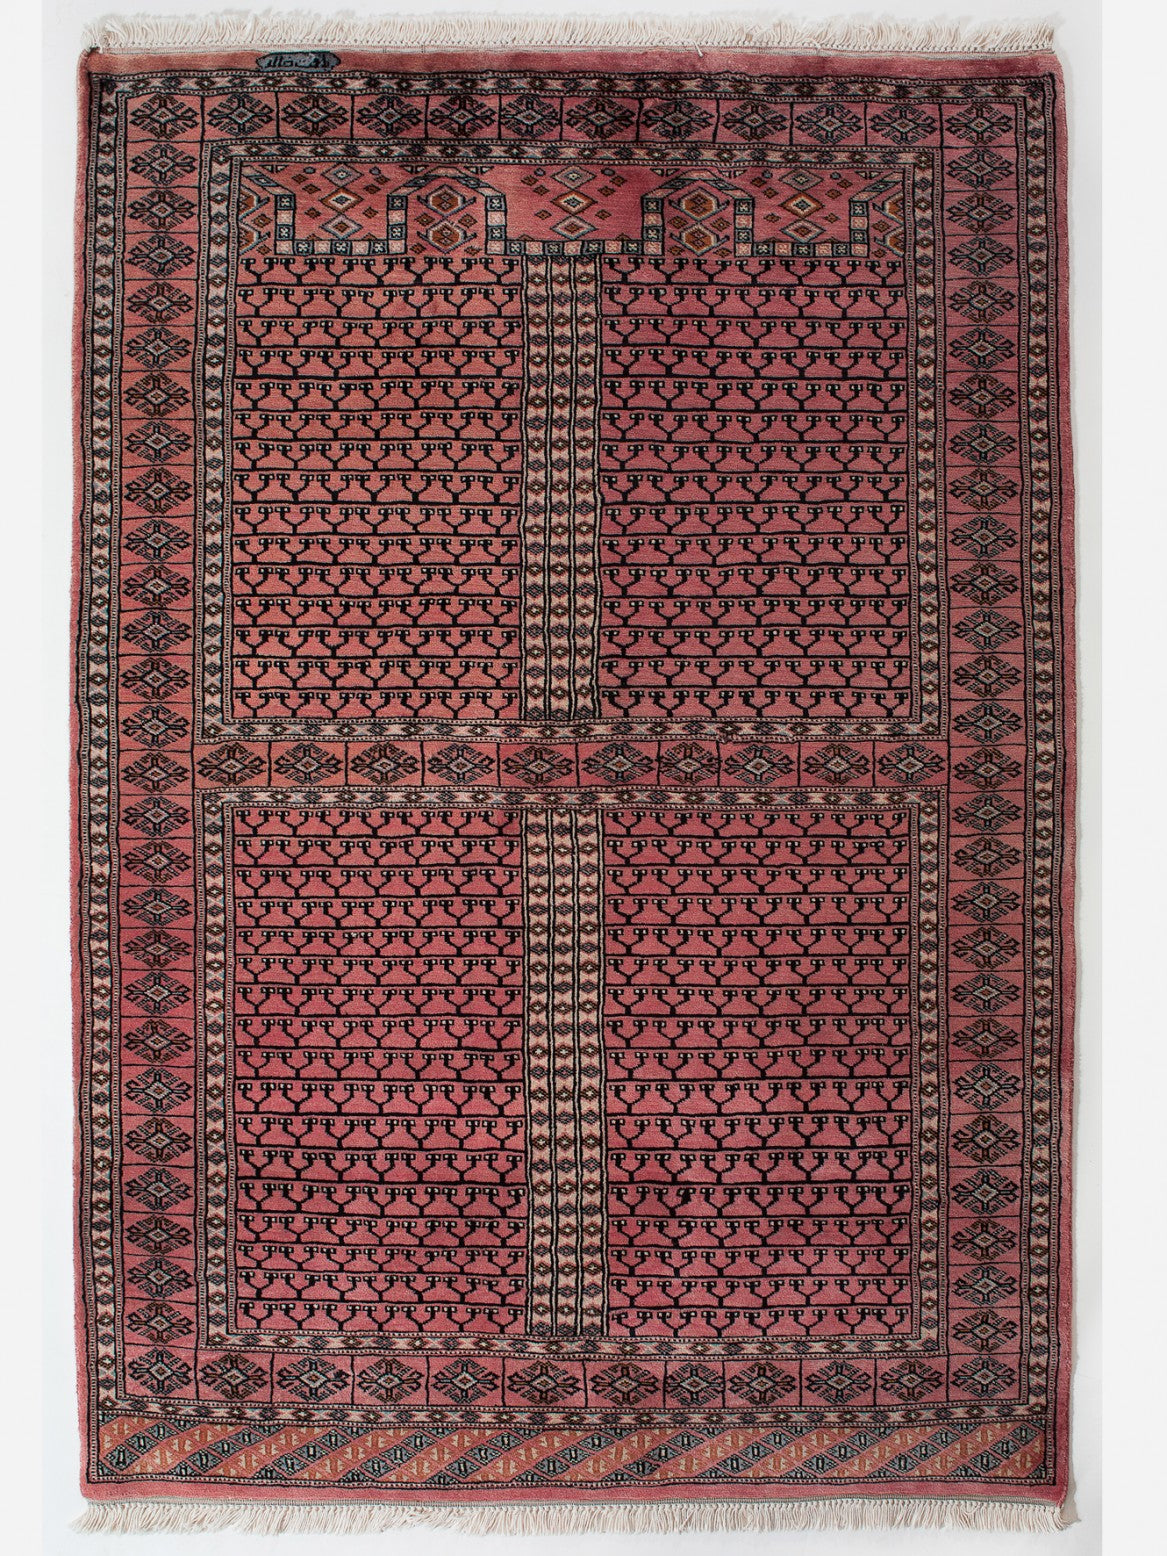 PAKISTAN KARACHI 185 x 123 cm